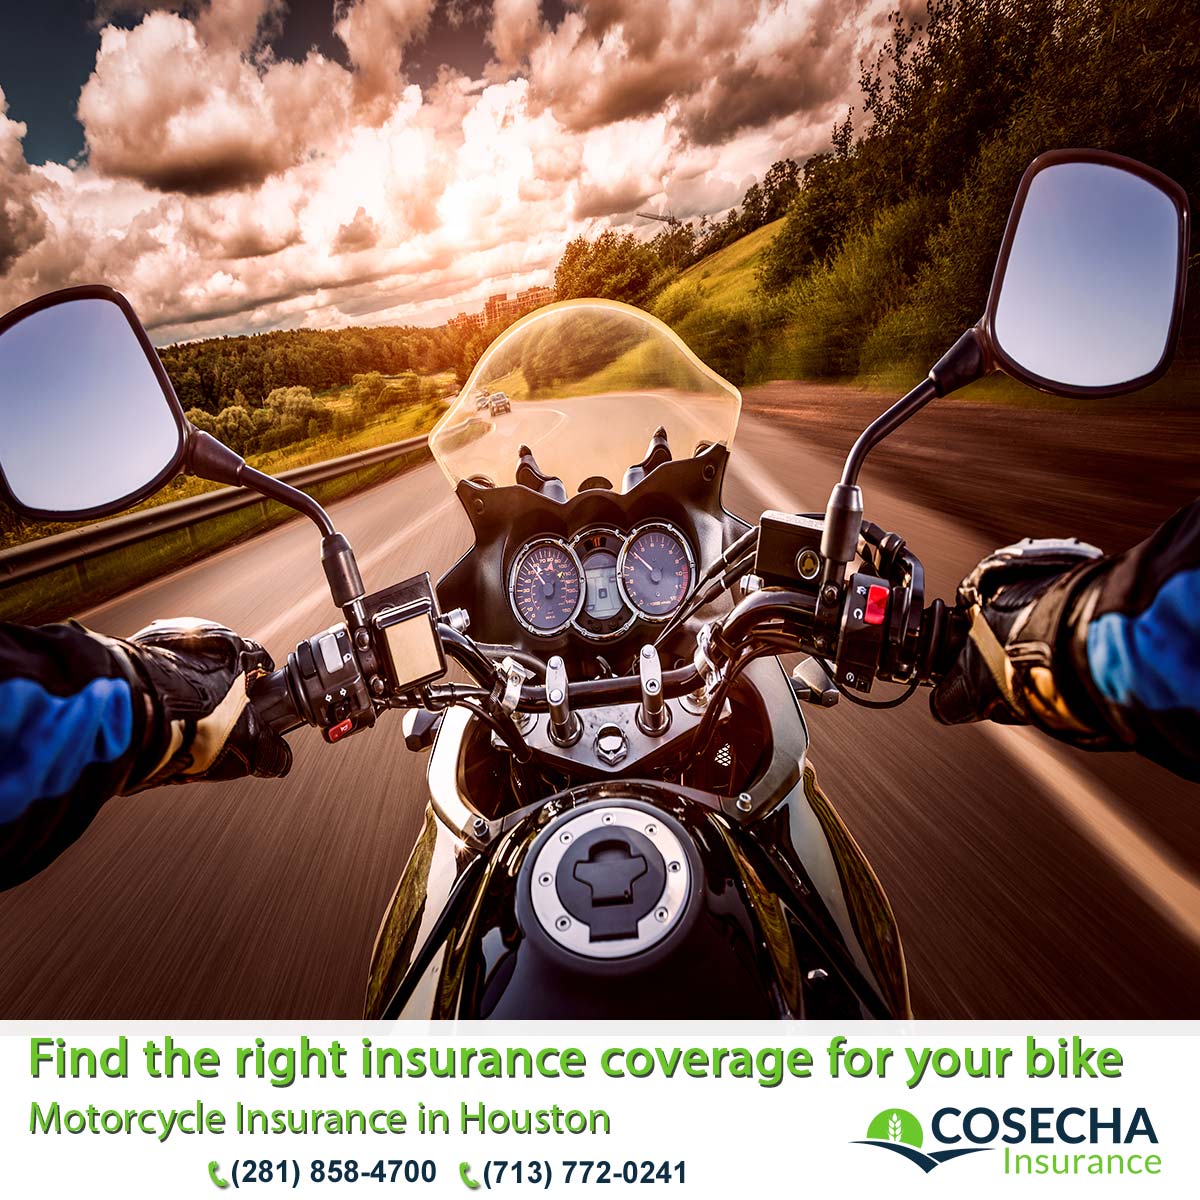 09 Motorcycle Insurance in Houston